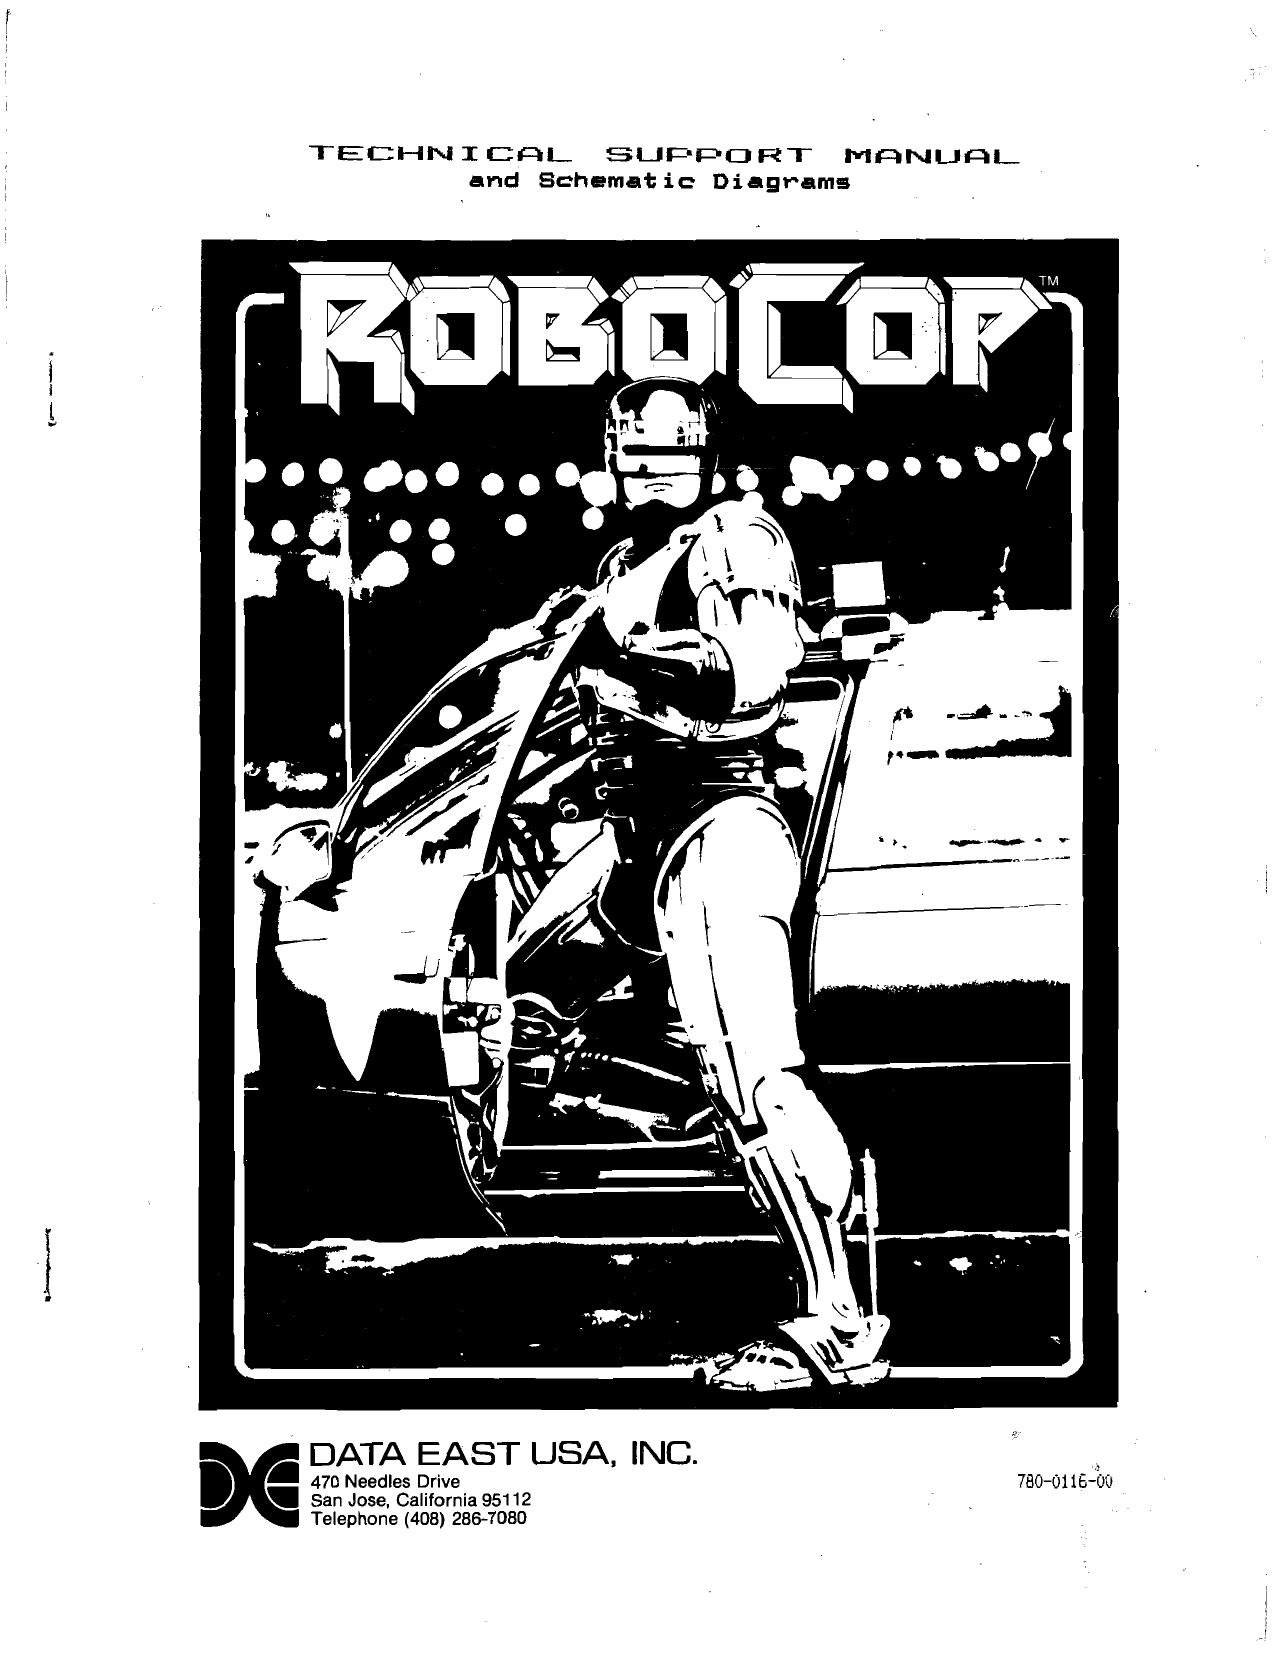 Robocop Technical Support manual